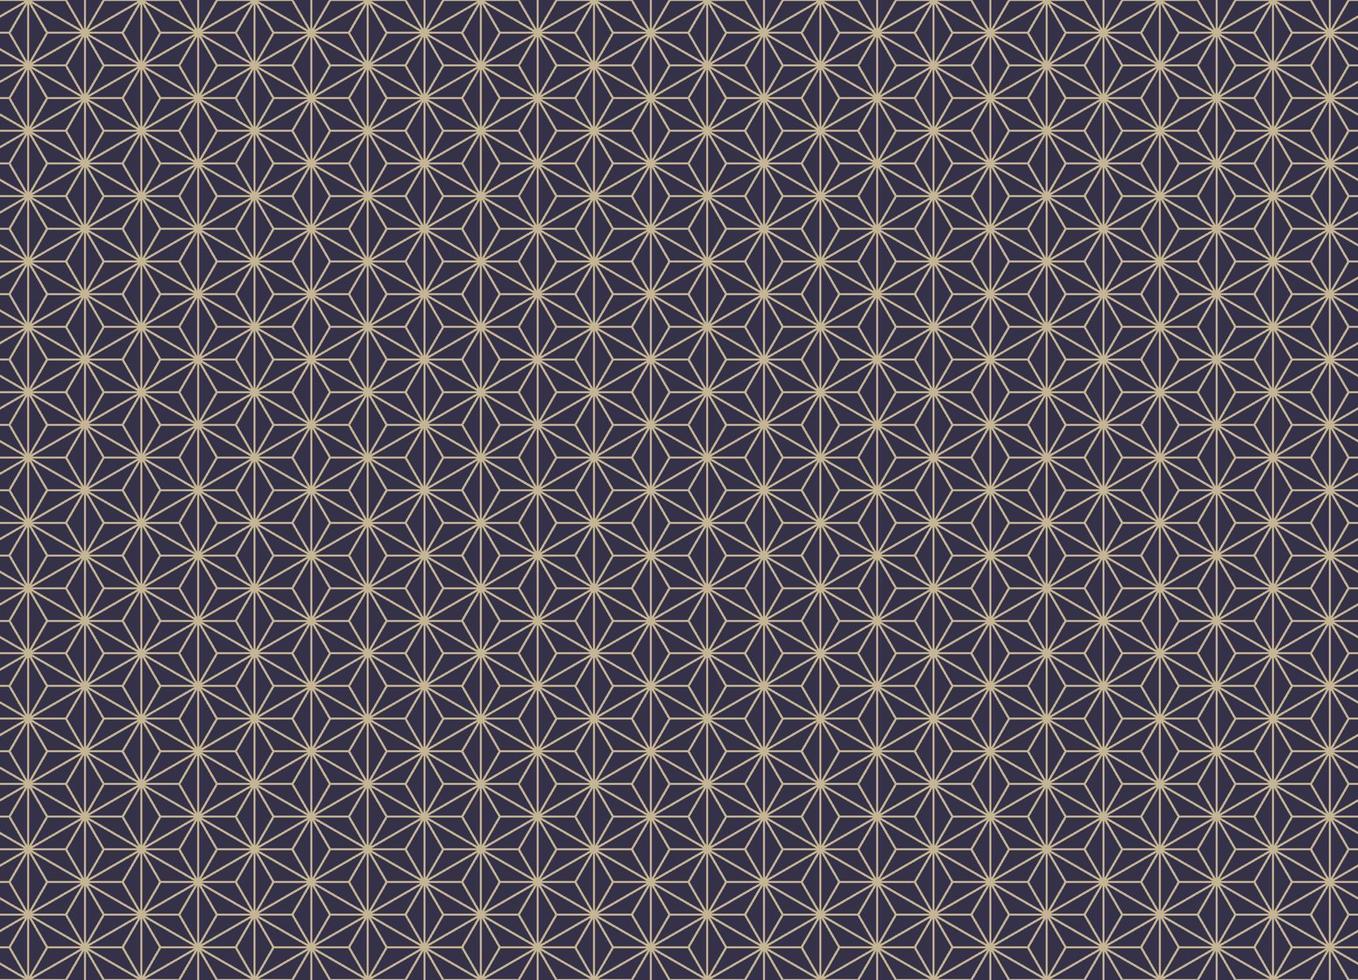 cuadrícula de línea de geometría isométrica sobre fondo transparente azul oscuro. patrón de asanoha japonés diseño de color contemporáneo. uso para telas, textiles, elementos de decoración de interiores, tapicería, envoltura. vector